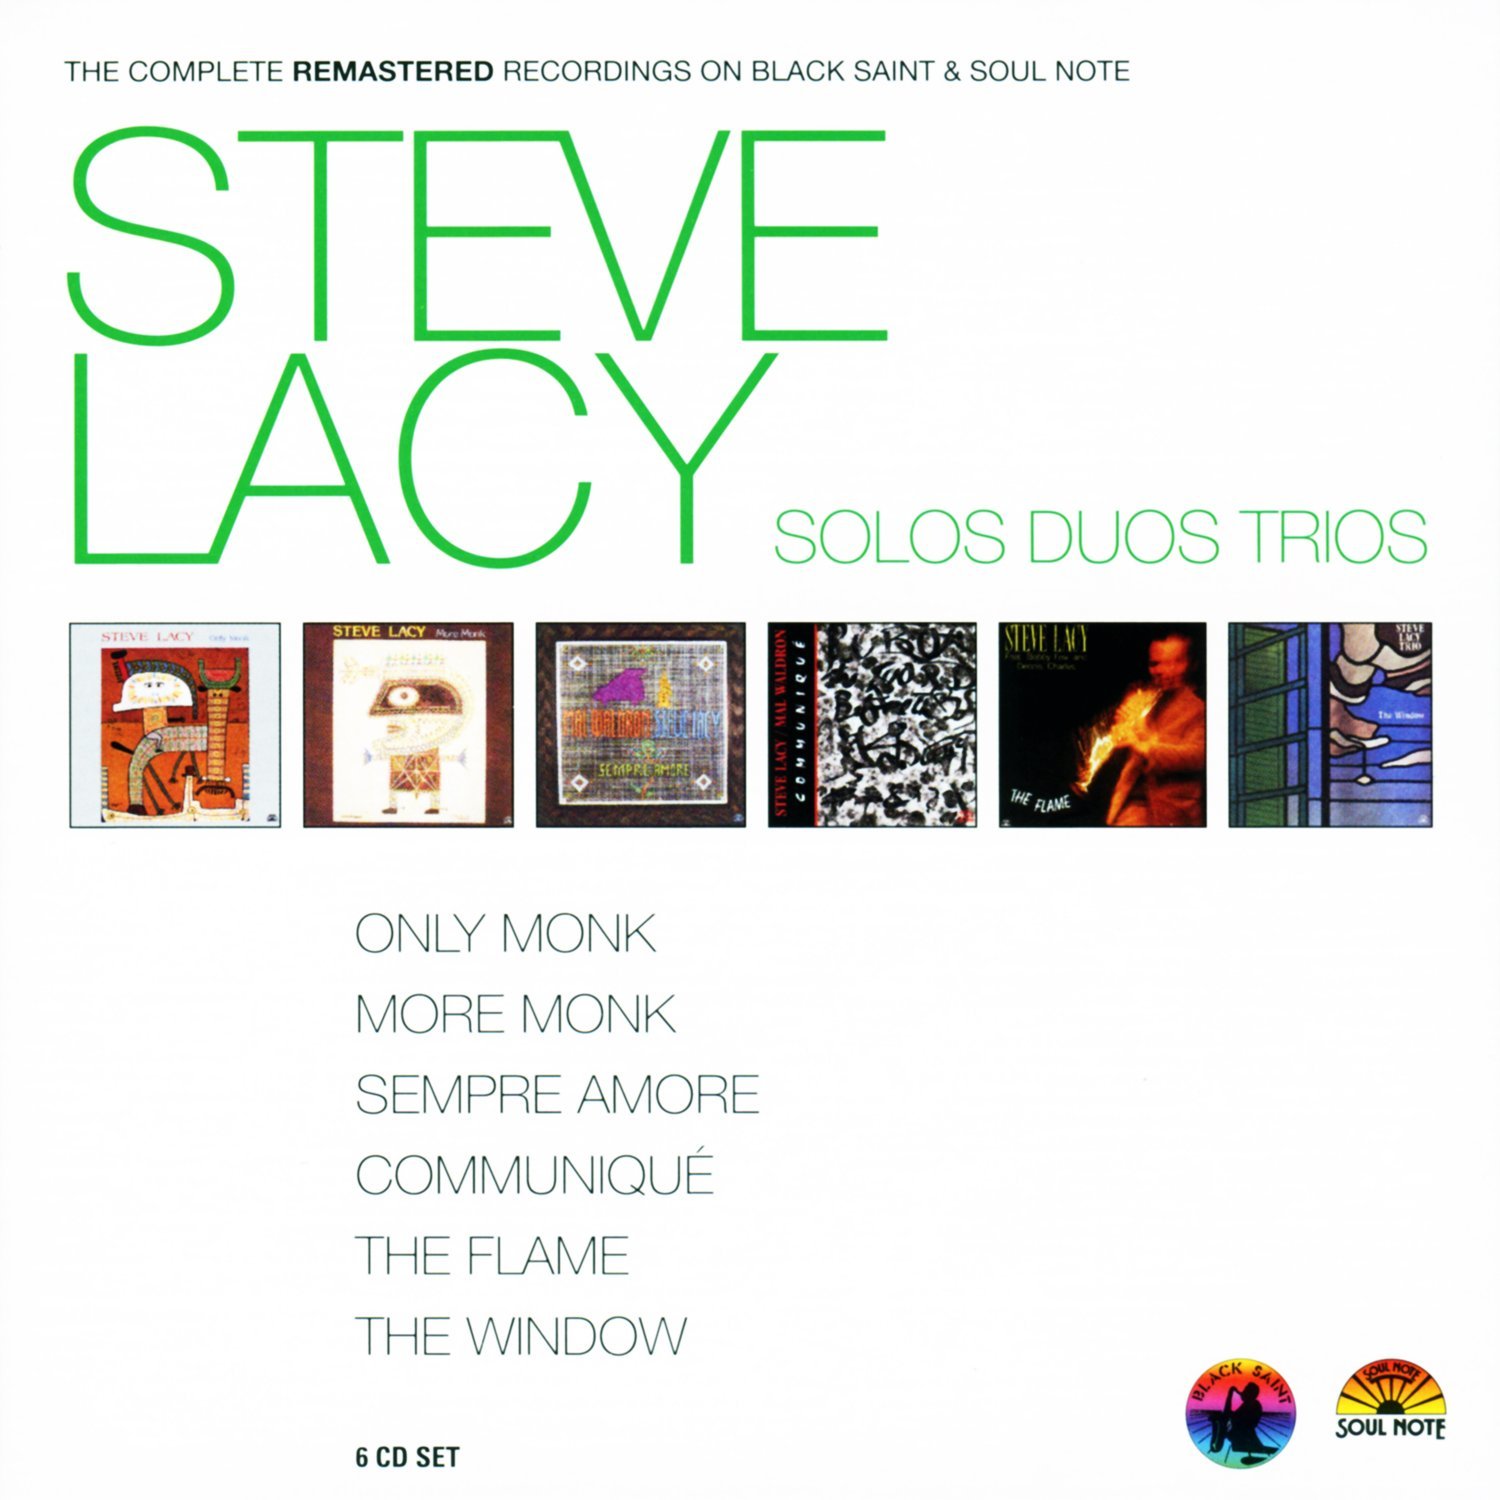 Steve Lacy Jazz. Lacy, Steve "evidence (CD)". Solo Duo Trio. Soul Notes картинки. Соло дуо трио